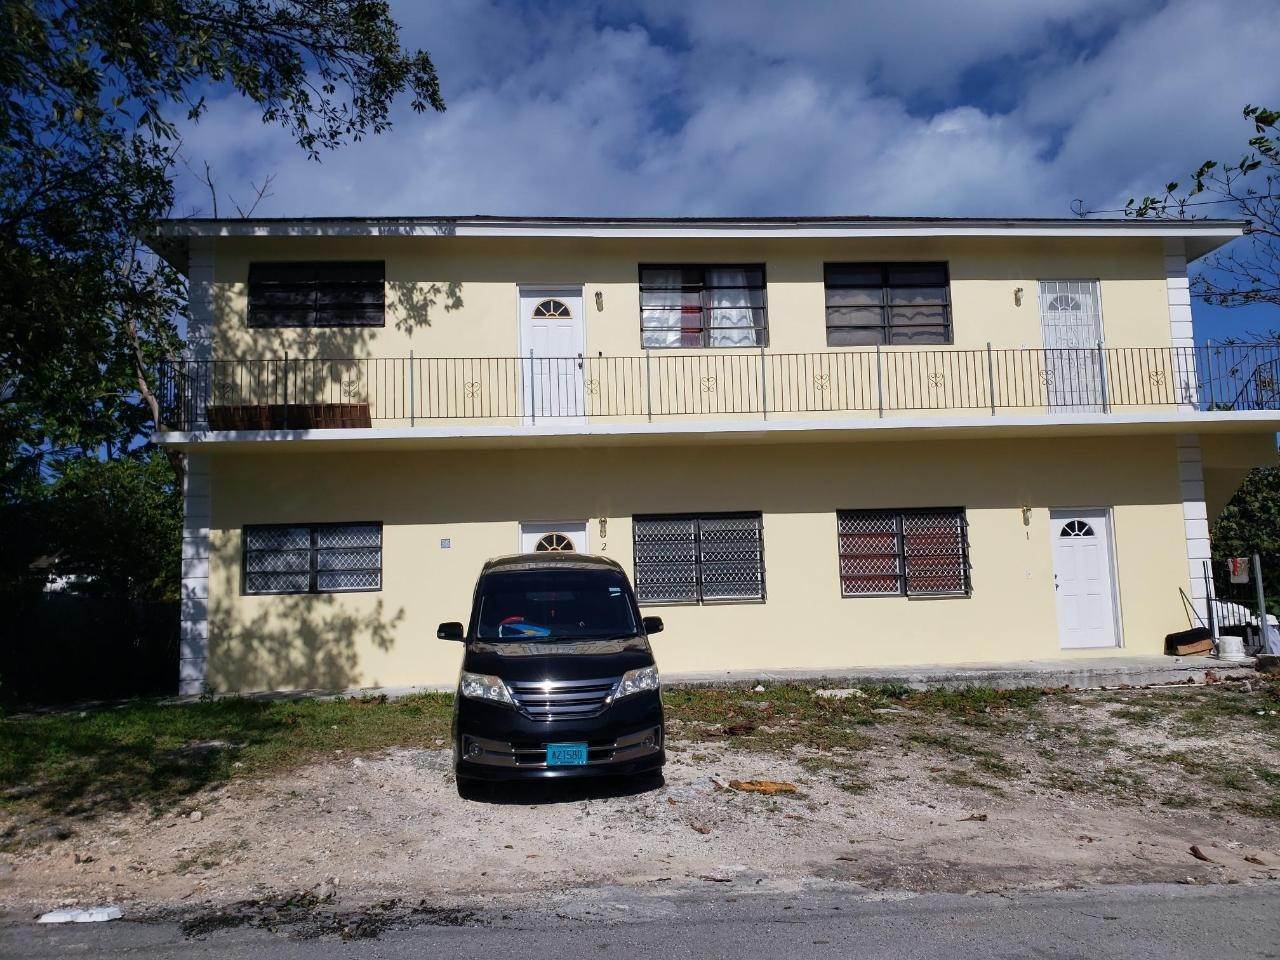 Multi-Family Homes for Sale at Mackey Street, Nassau and Paradise Island Bahamas